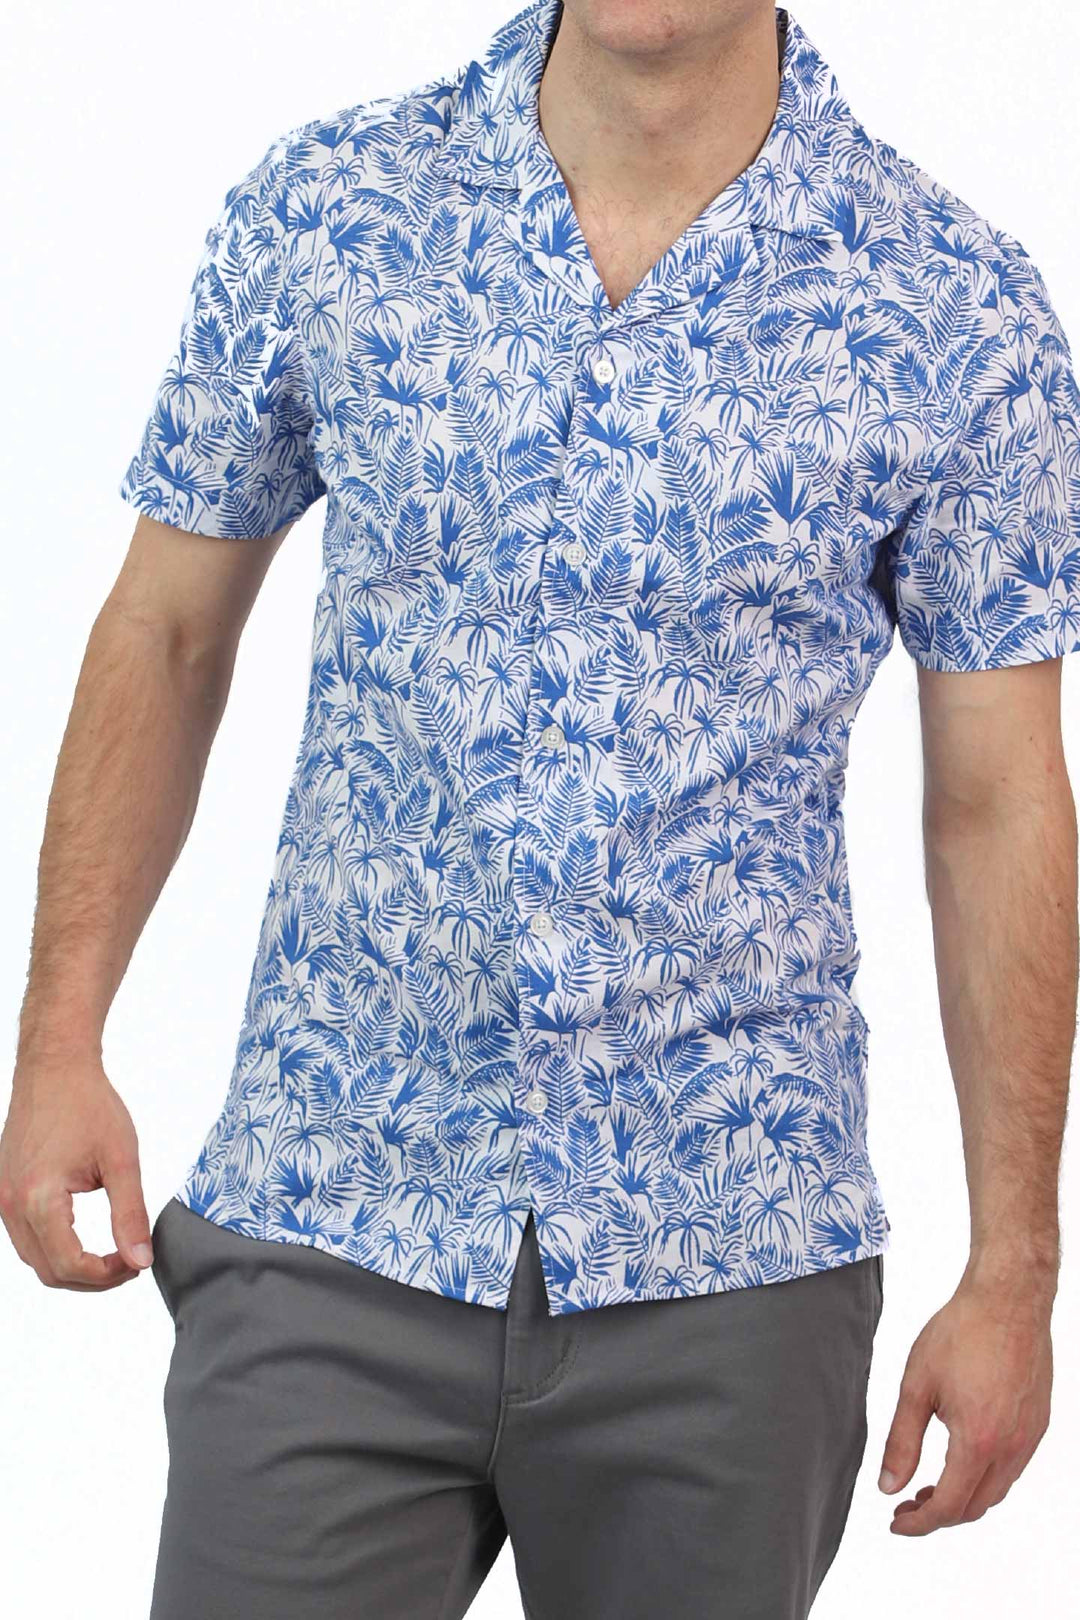 Buy Bermuda Palms Open Collar Shirt for Short Men | Ash & Erie   Short Sleeve Everyday Shirts